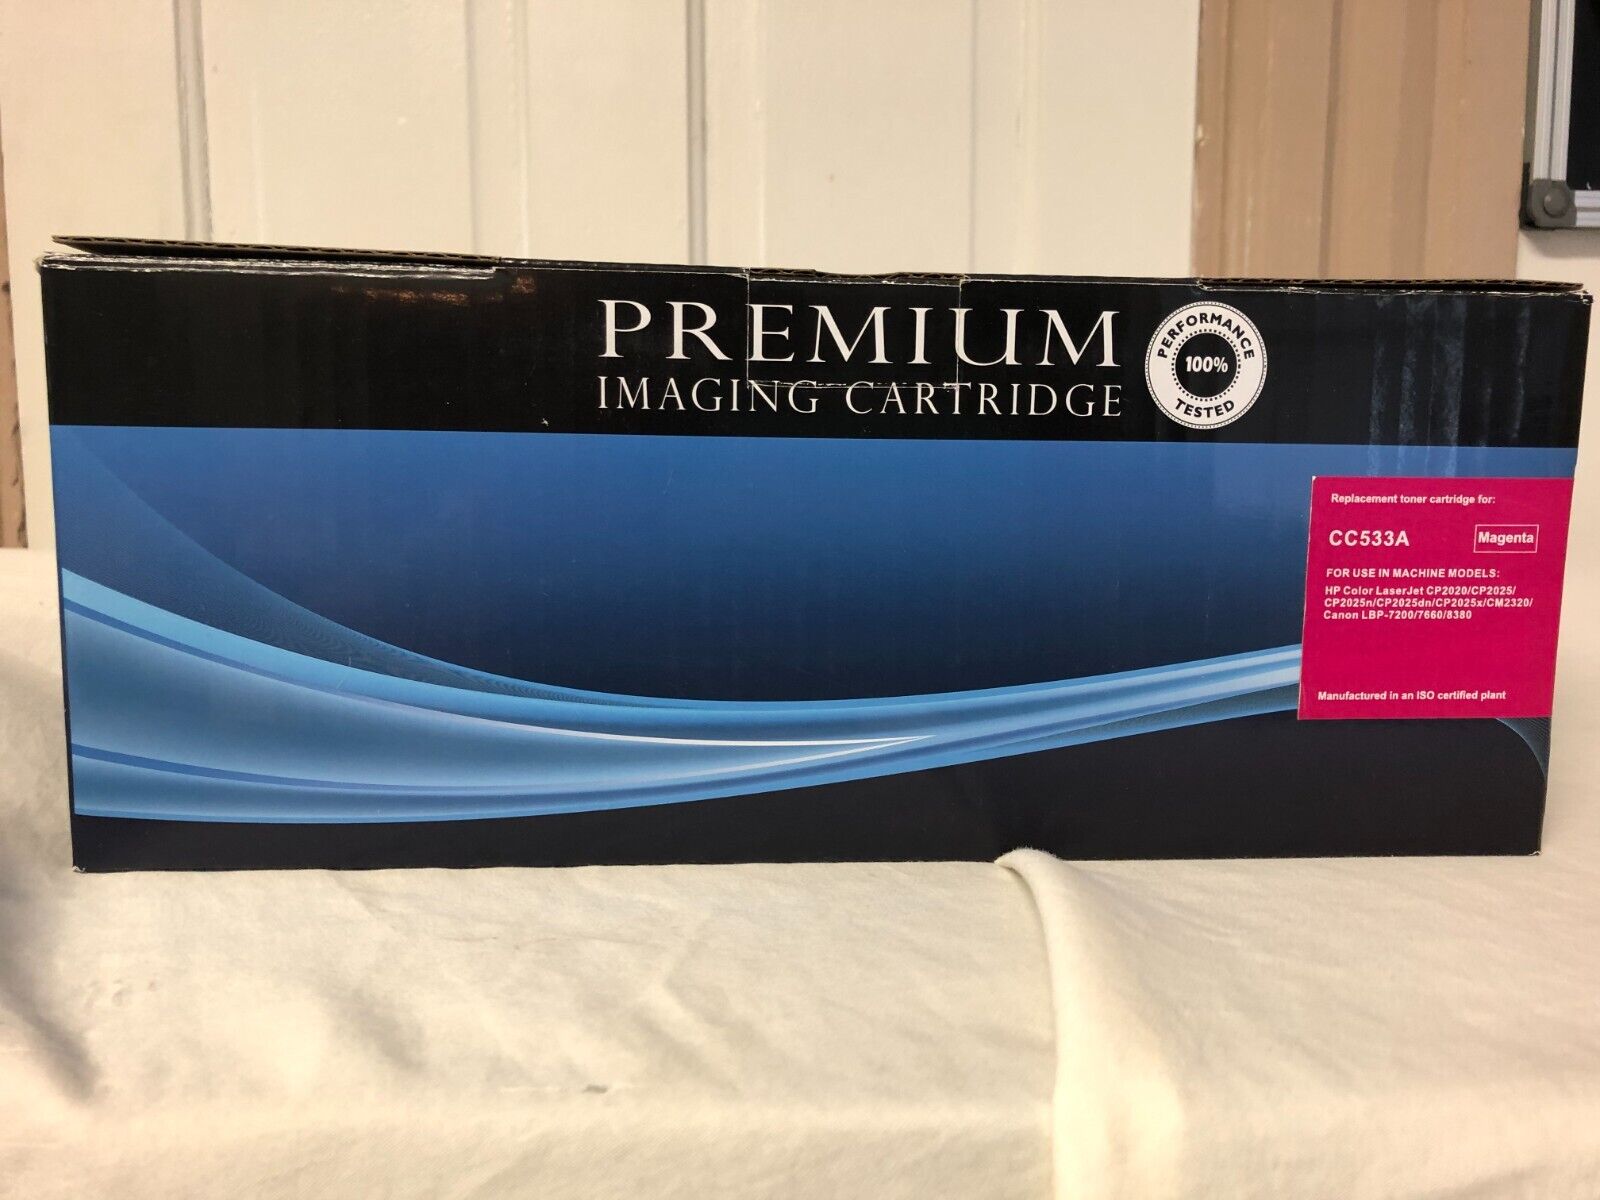 Premium Imaging Cartridge CC533A, Magenta, Replacement for HP LaserJet 304A